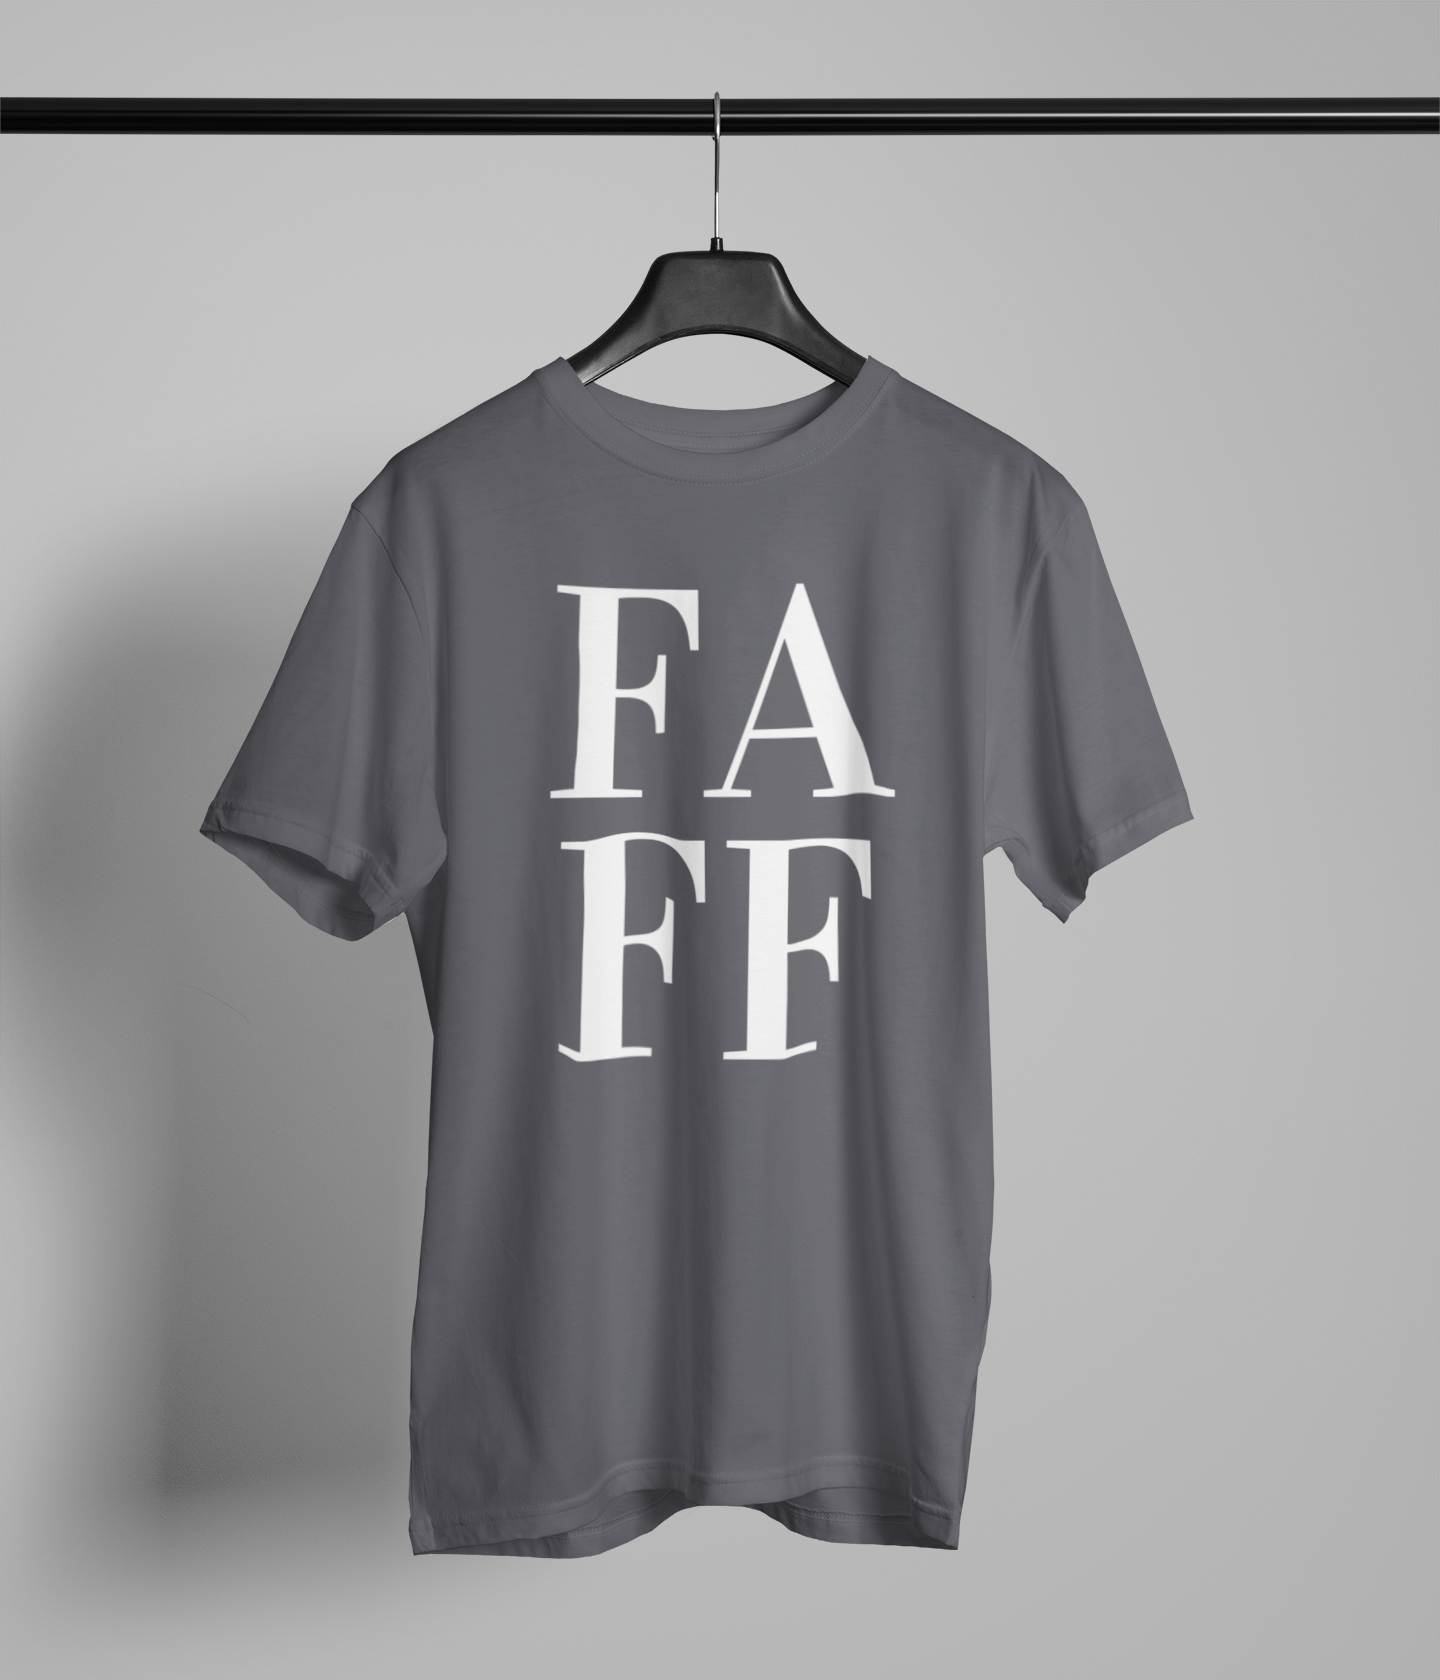 FAFF Northern Slang T-Shirt Unisex